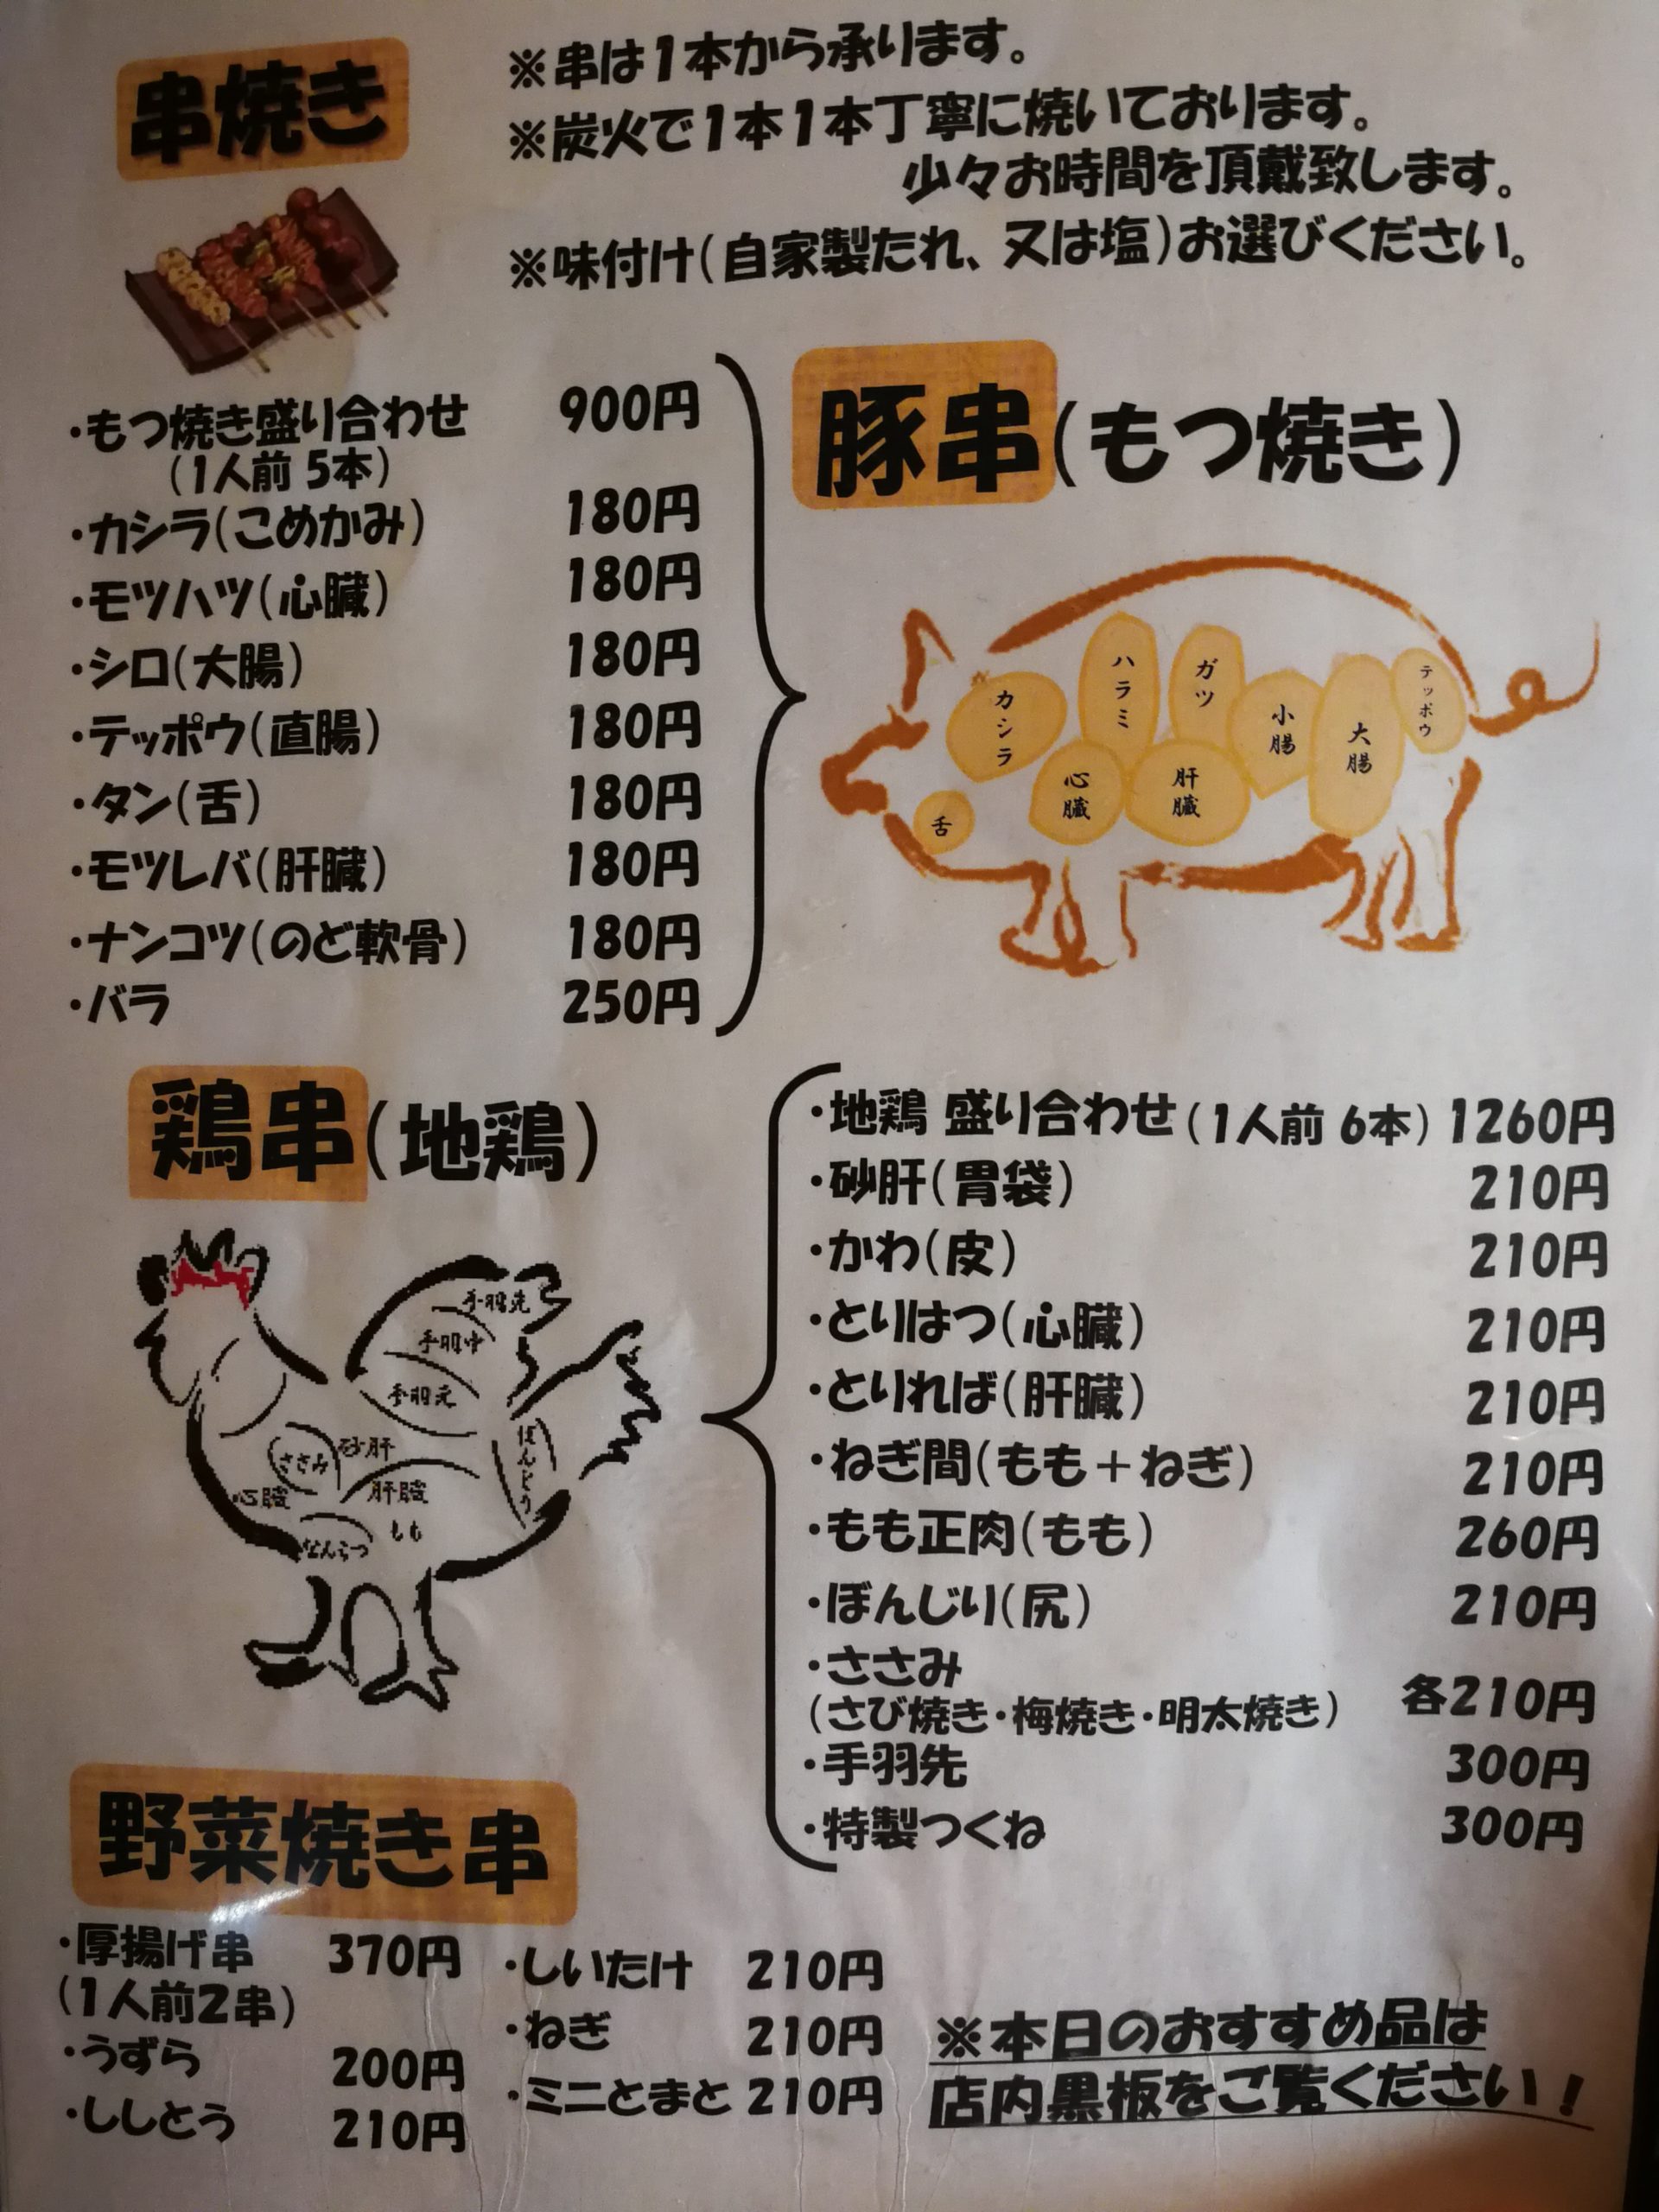 kikuya-sengawa-menu-02